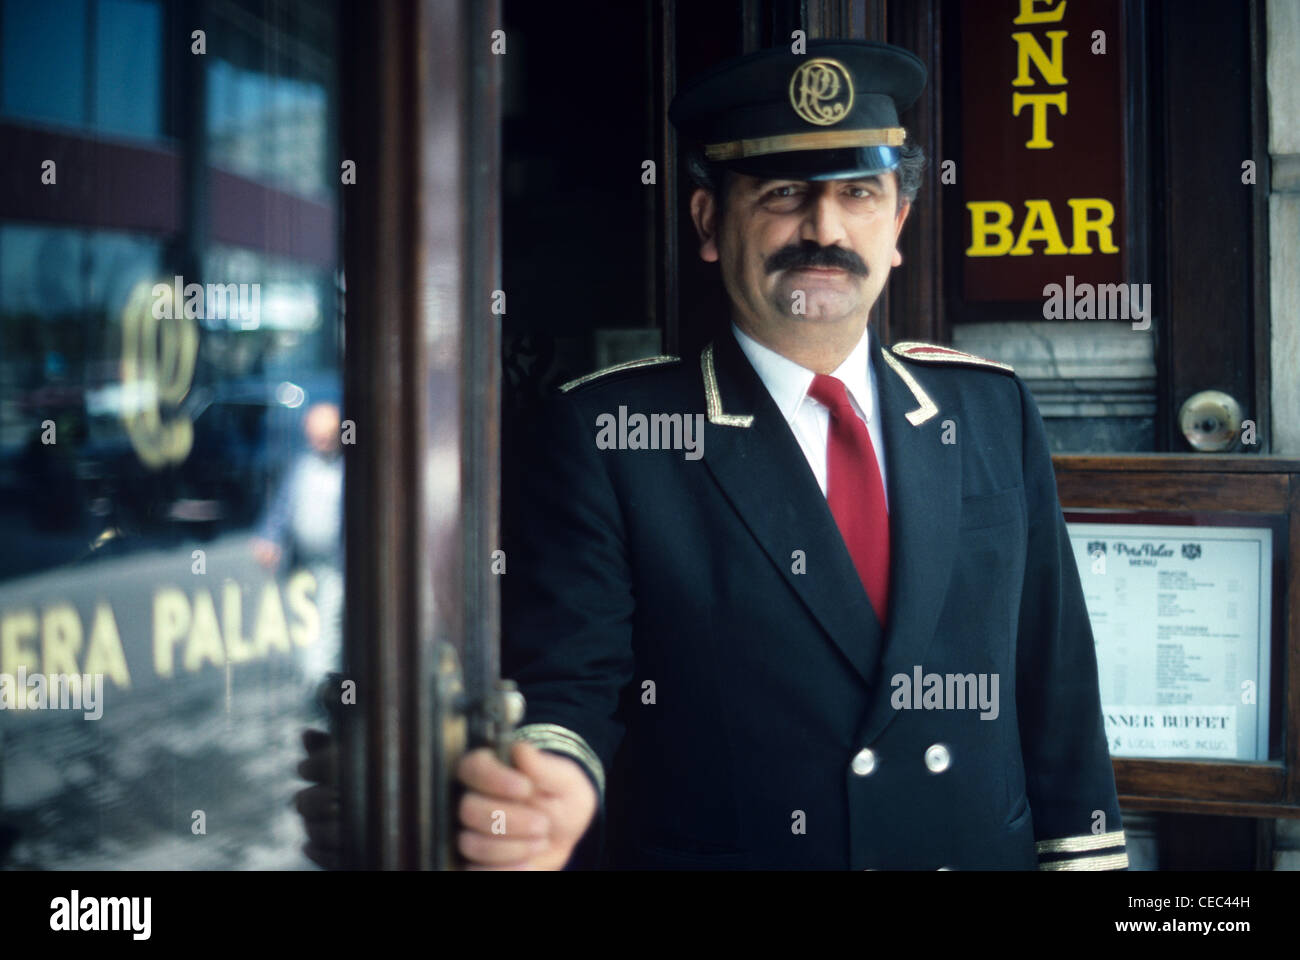 Turkish Doorman or Hall Porter at the Pera Palas or Pera Palace Hotel, Restaurant and Bar, Istanbul, Turkey Stock Photo